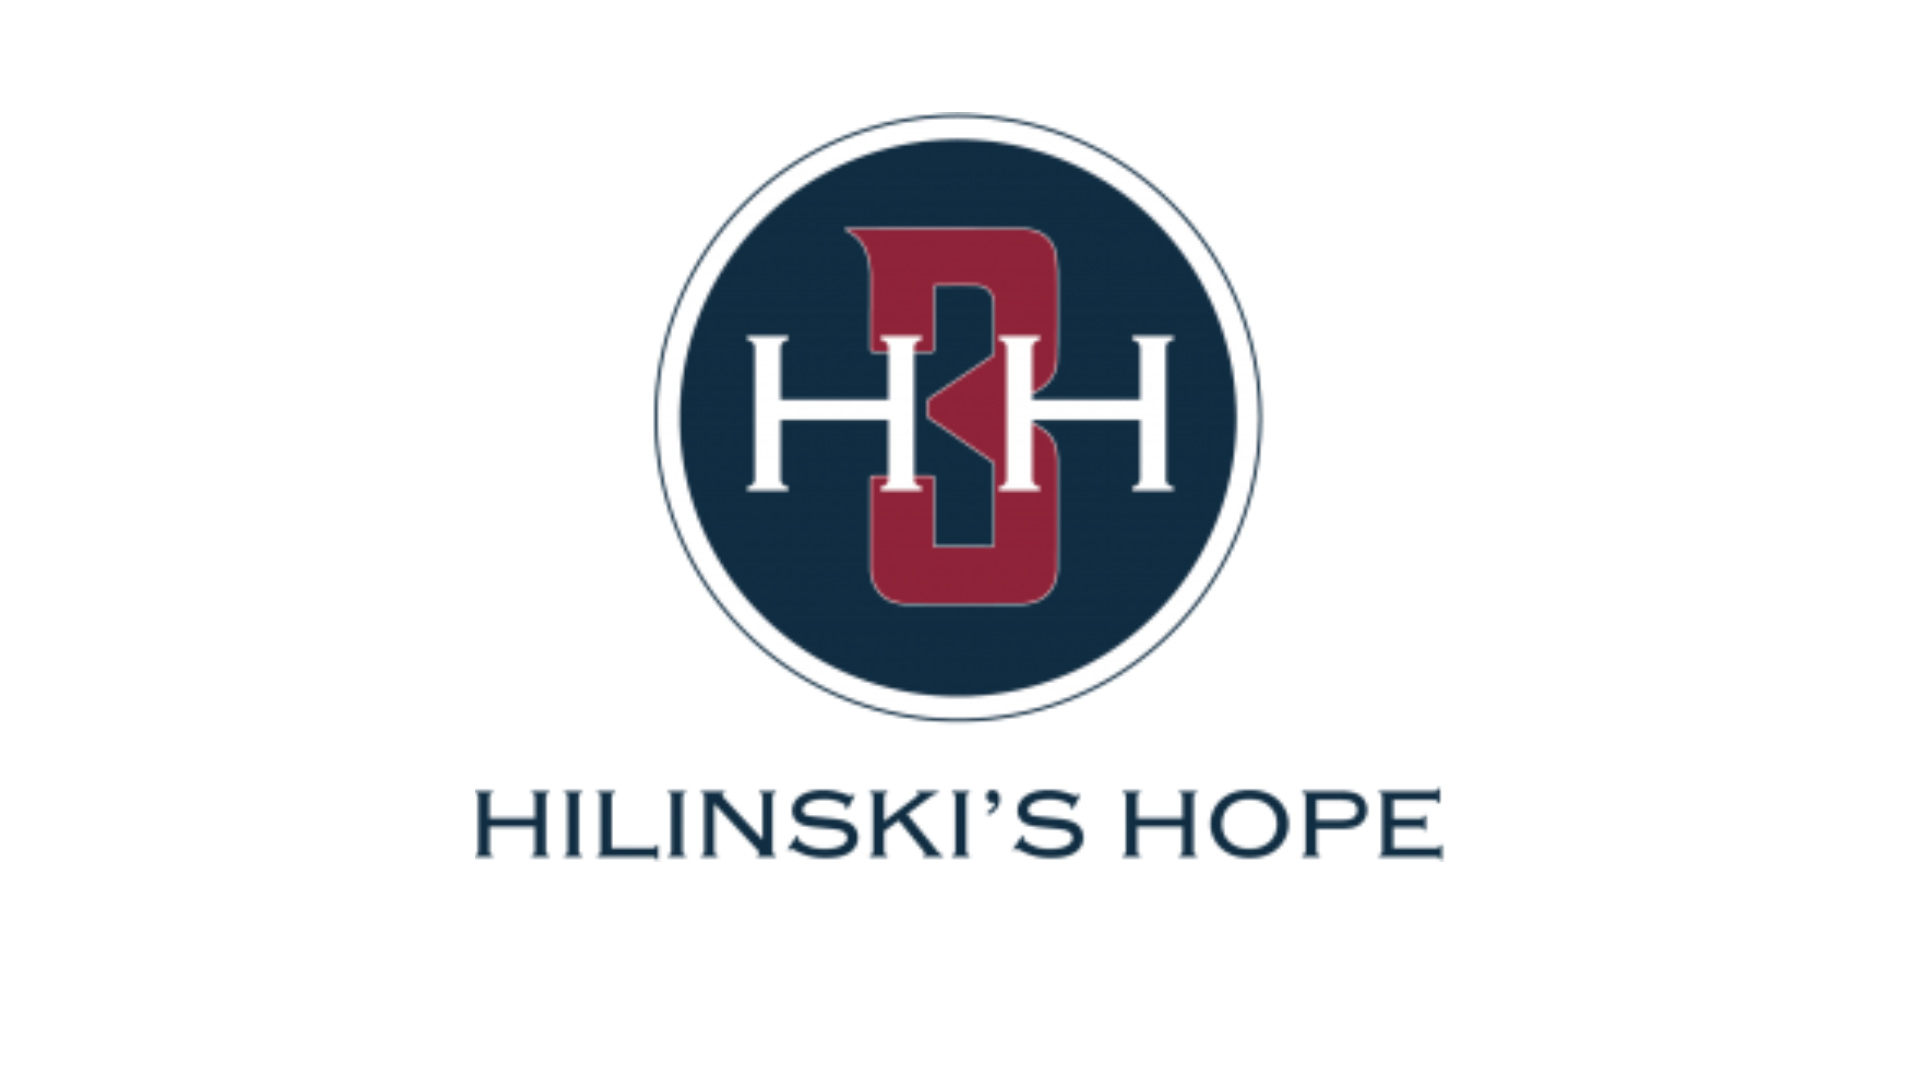 Hilinski's Hope logo